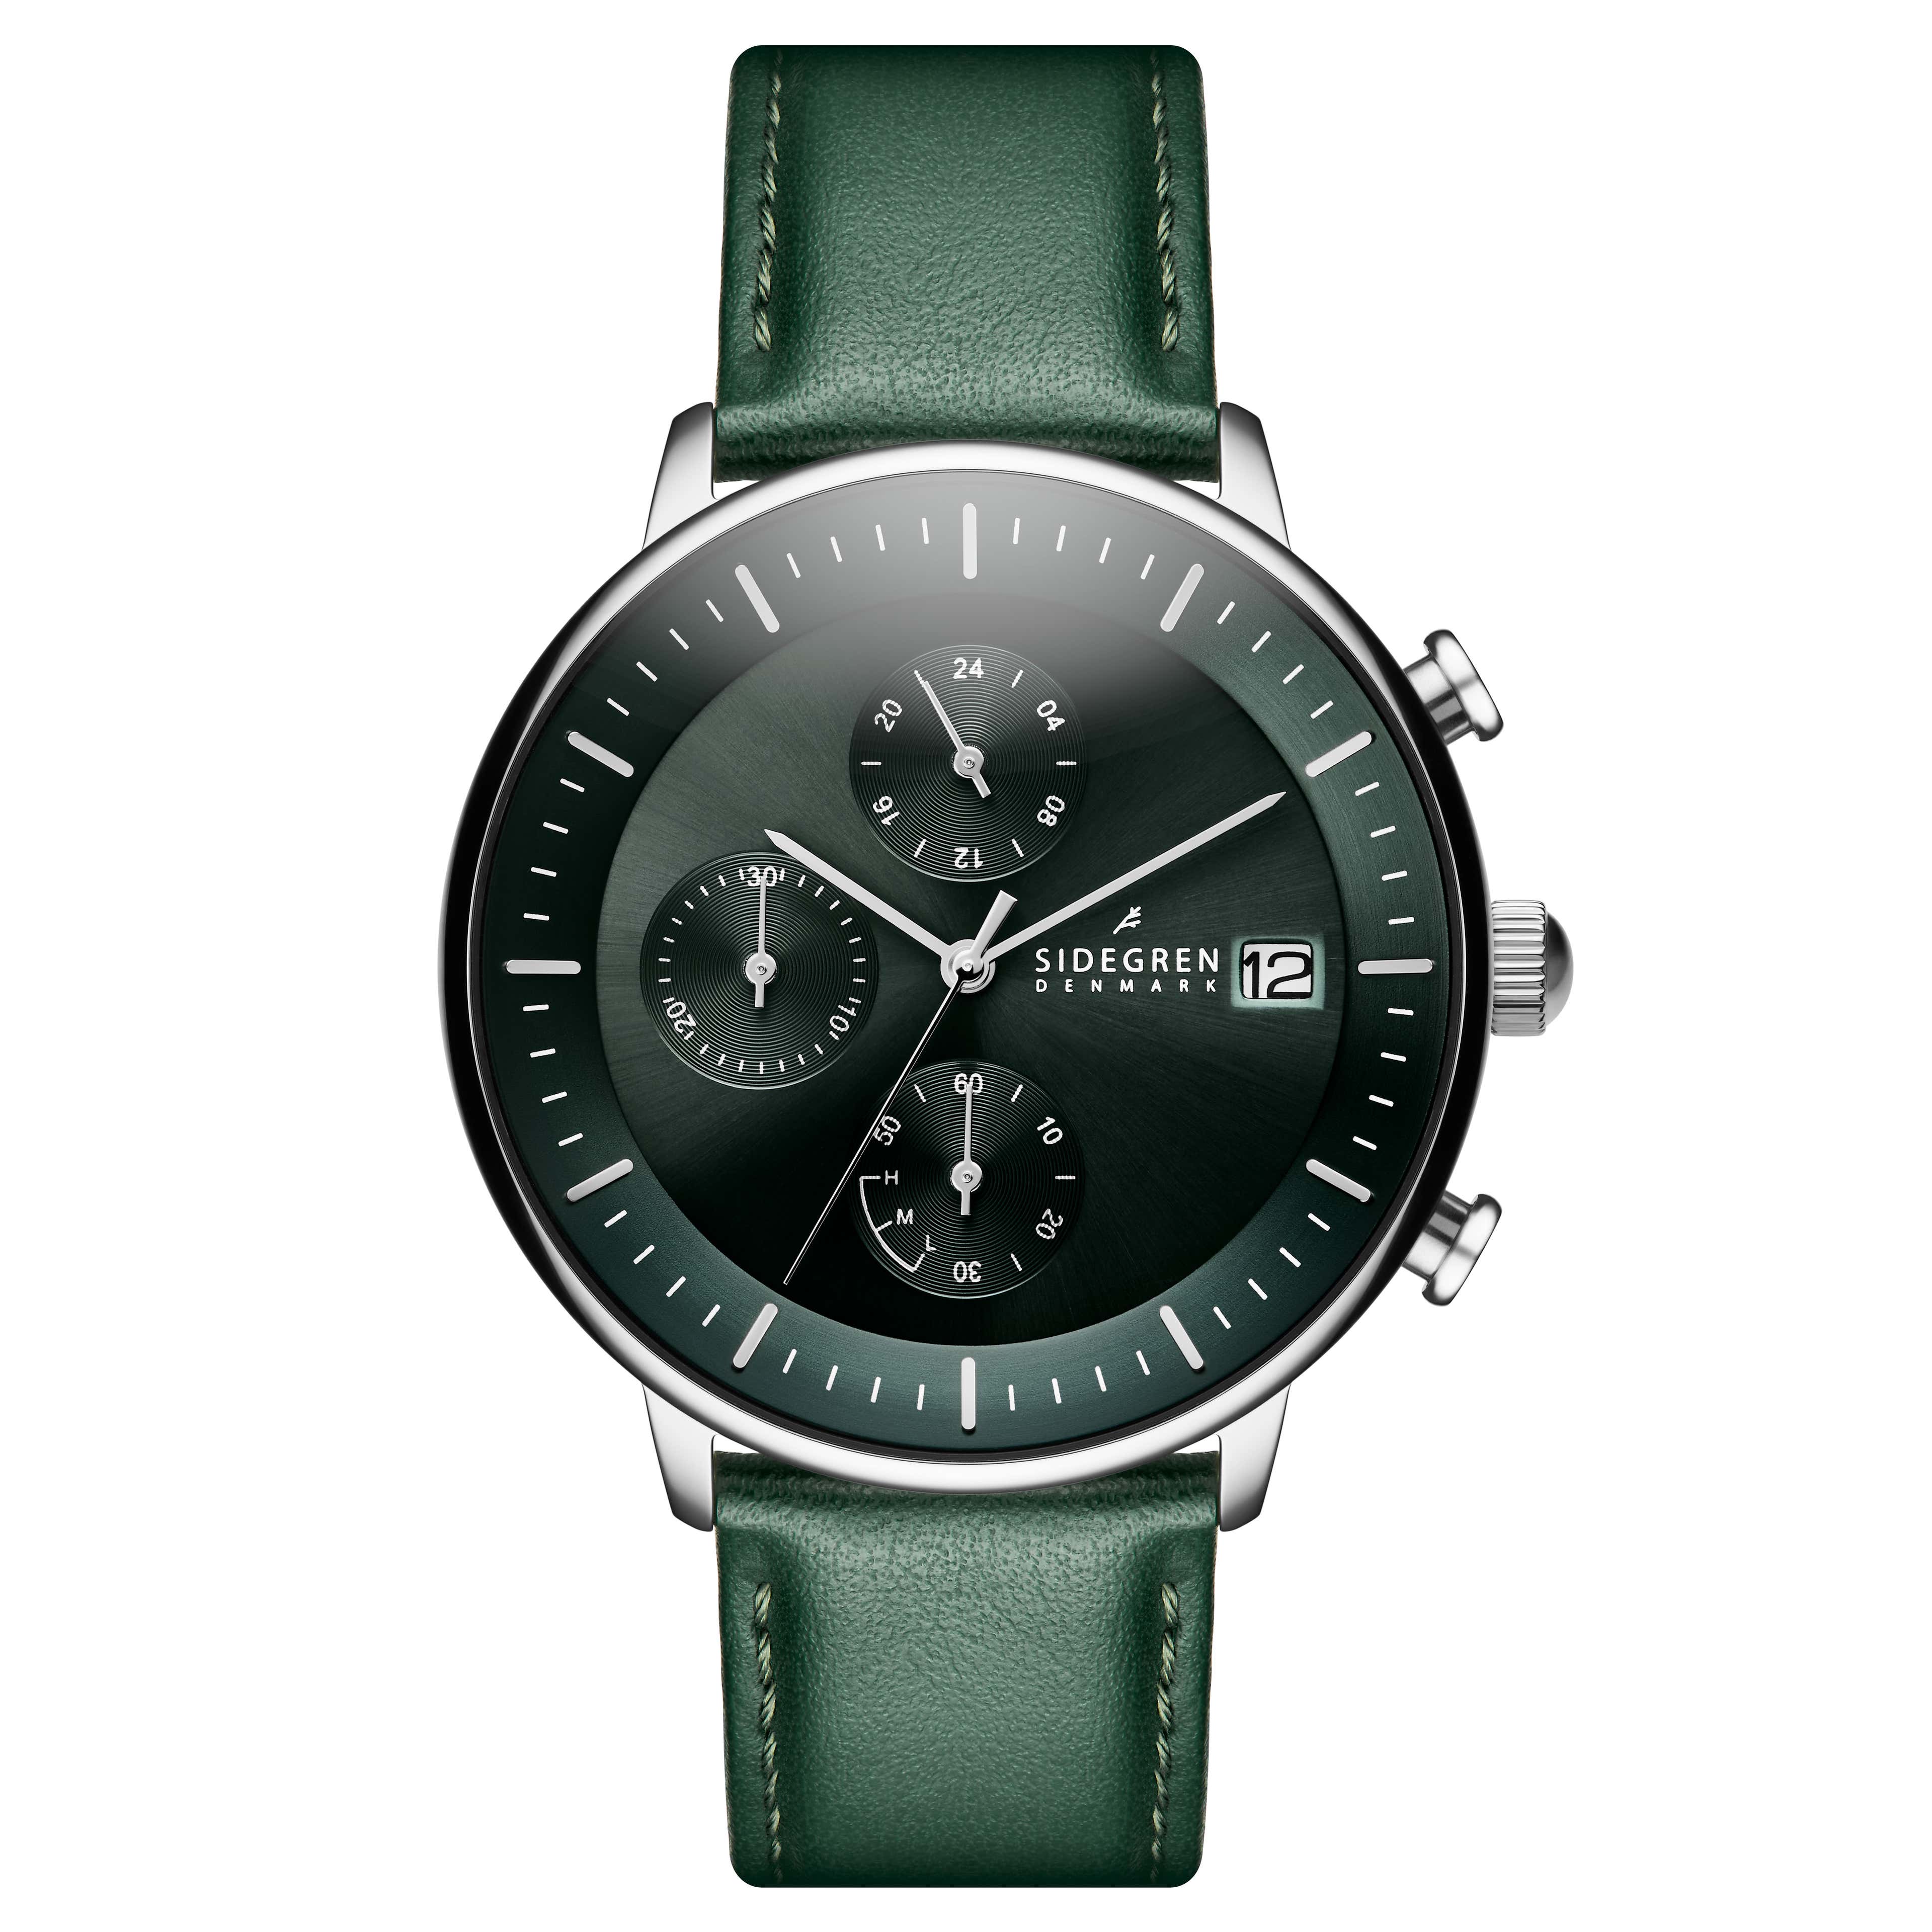 Solis | Green Solar-Powered Chronograph Watch